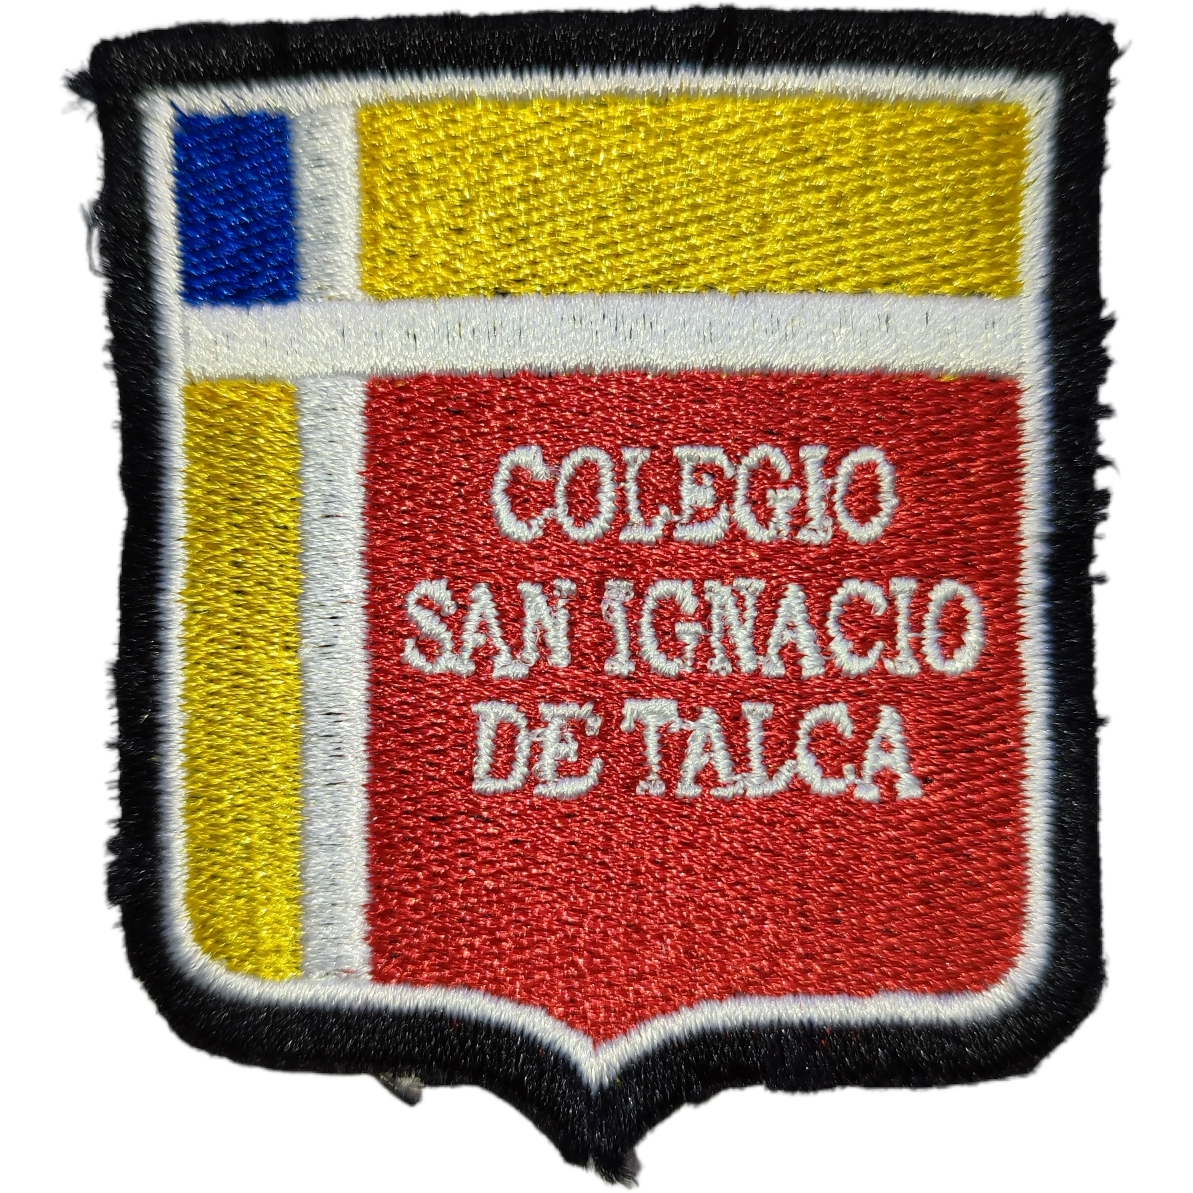 Insignia San Ignacio Talca